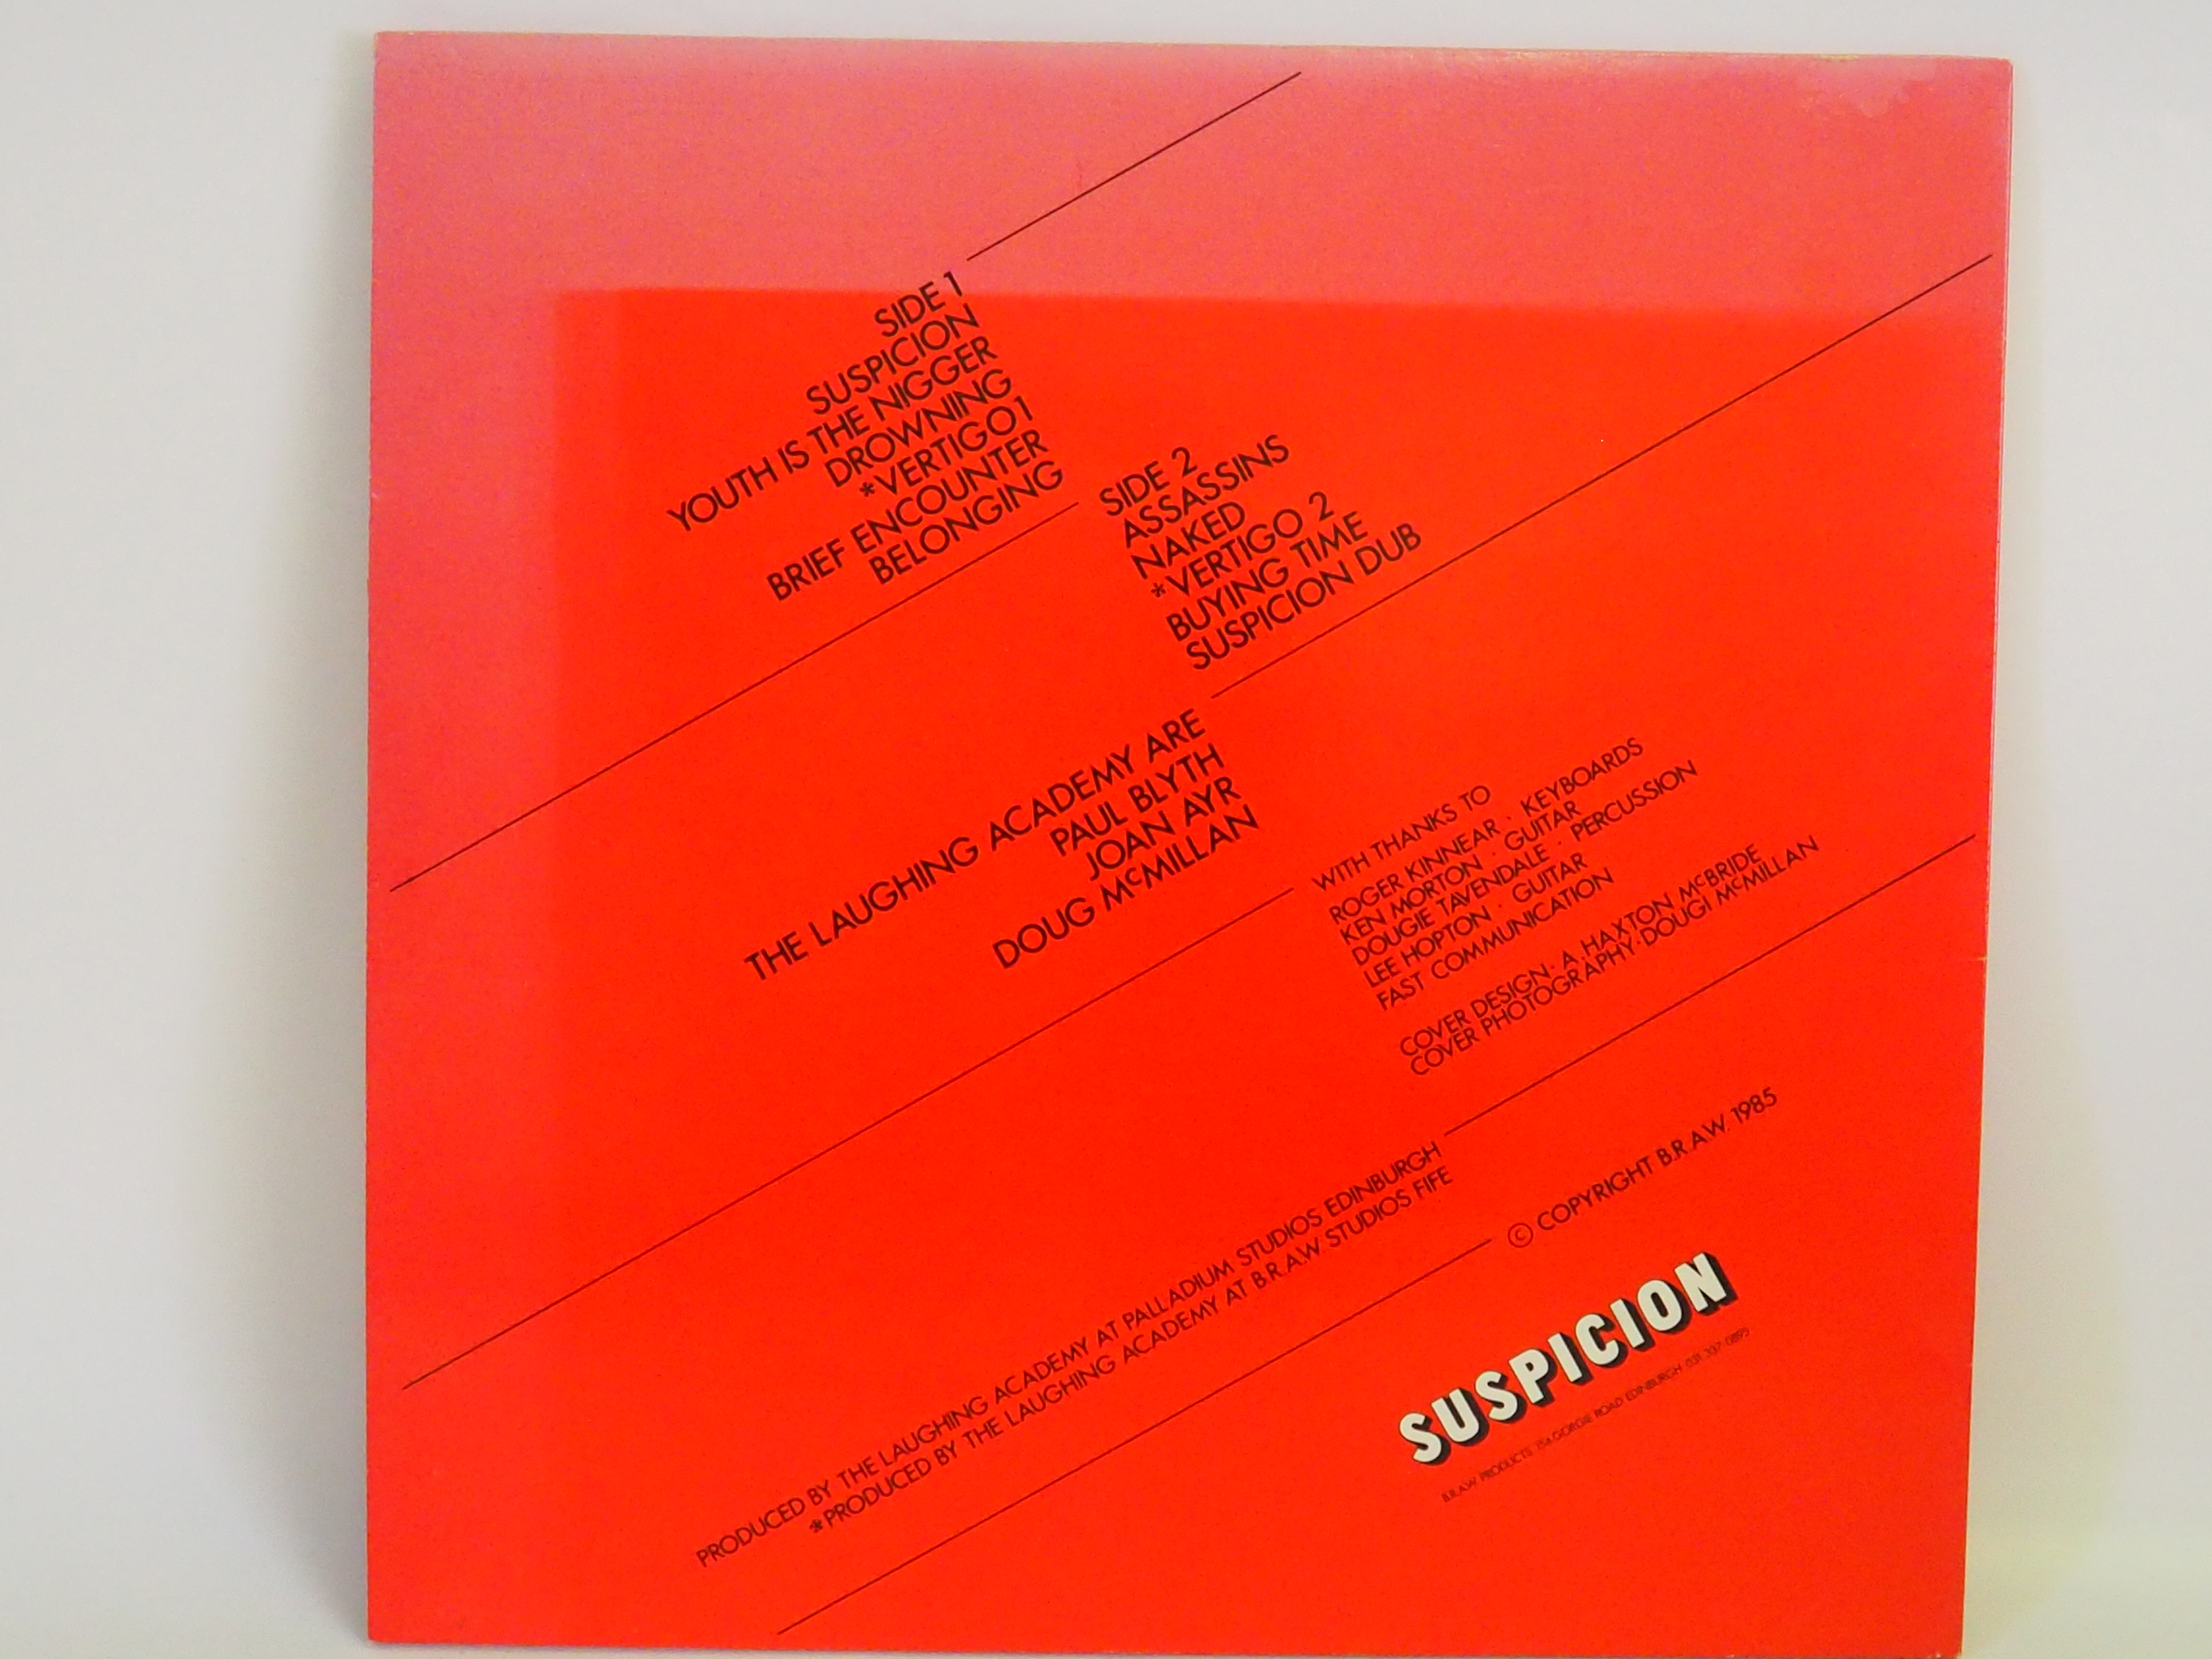 The Laughing Academy - Suspicion - 12" Vinyl Album - Image 3 of 3